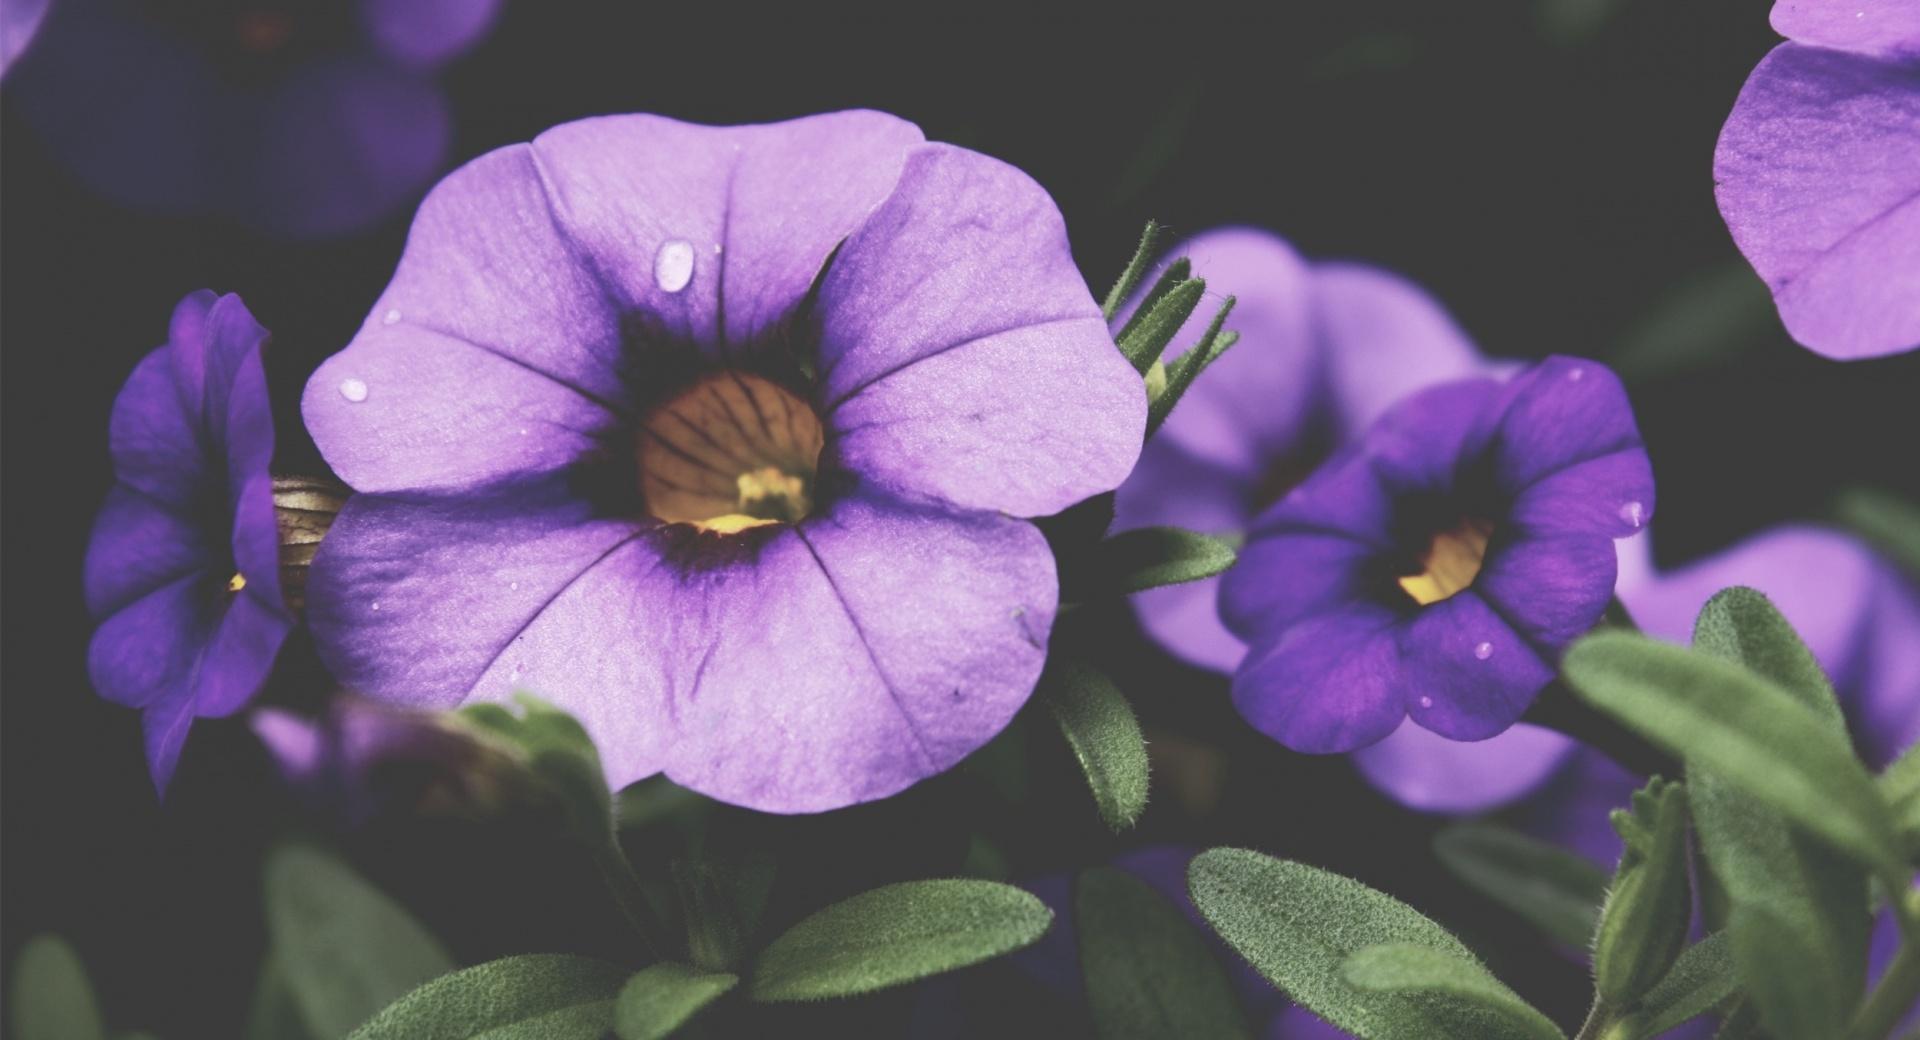 Purple Petunia Flowers at 1024 x 1024 iPad size wallpapers HD quality